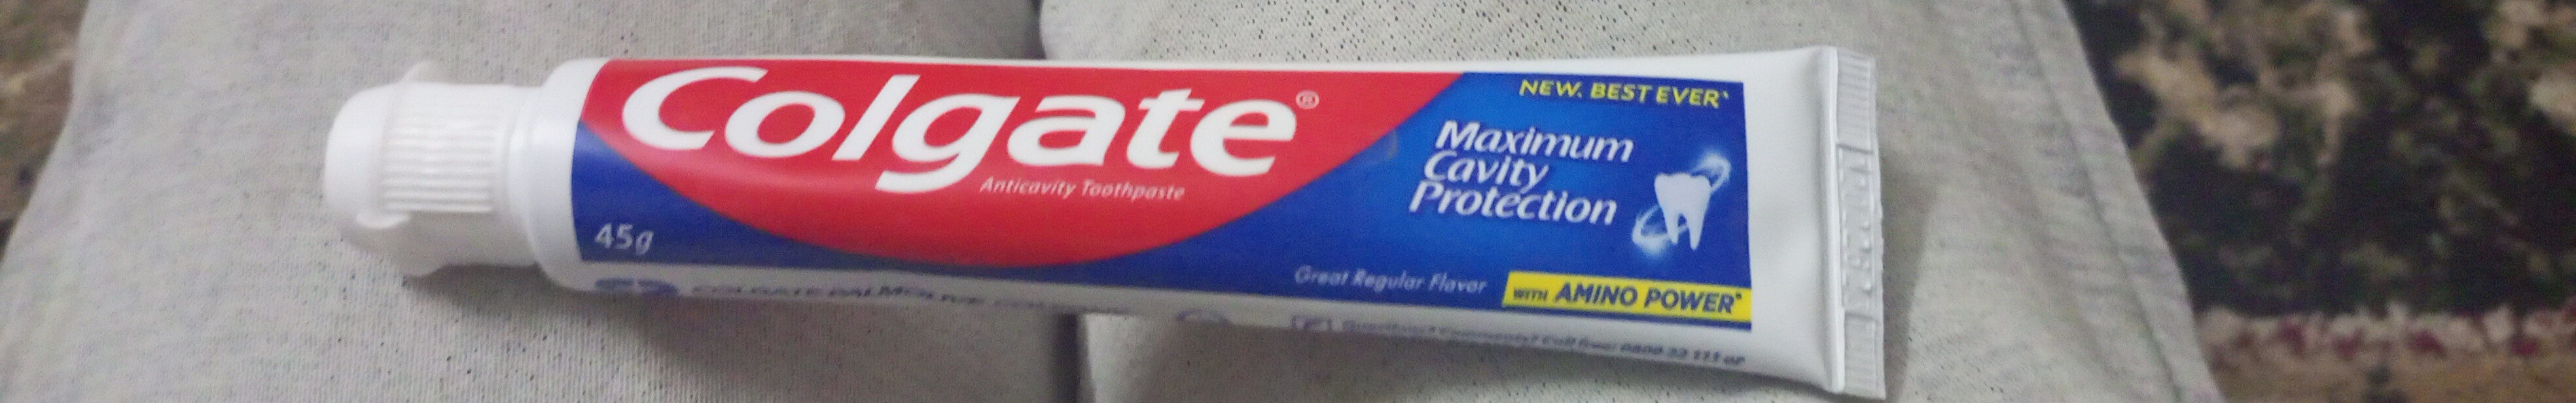 Colgate anticavity toothpaste - Product - en